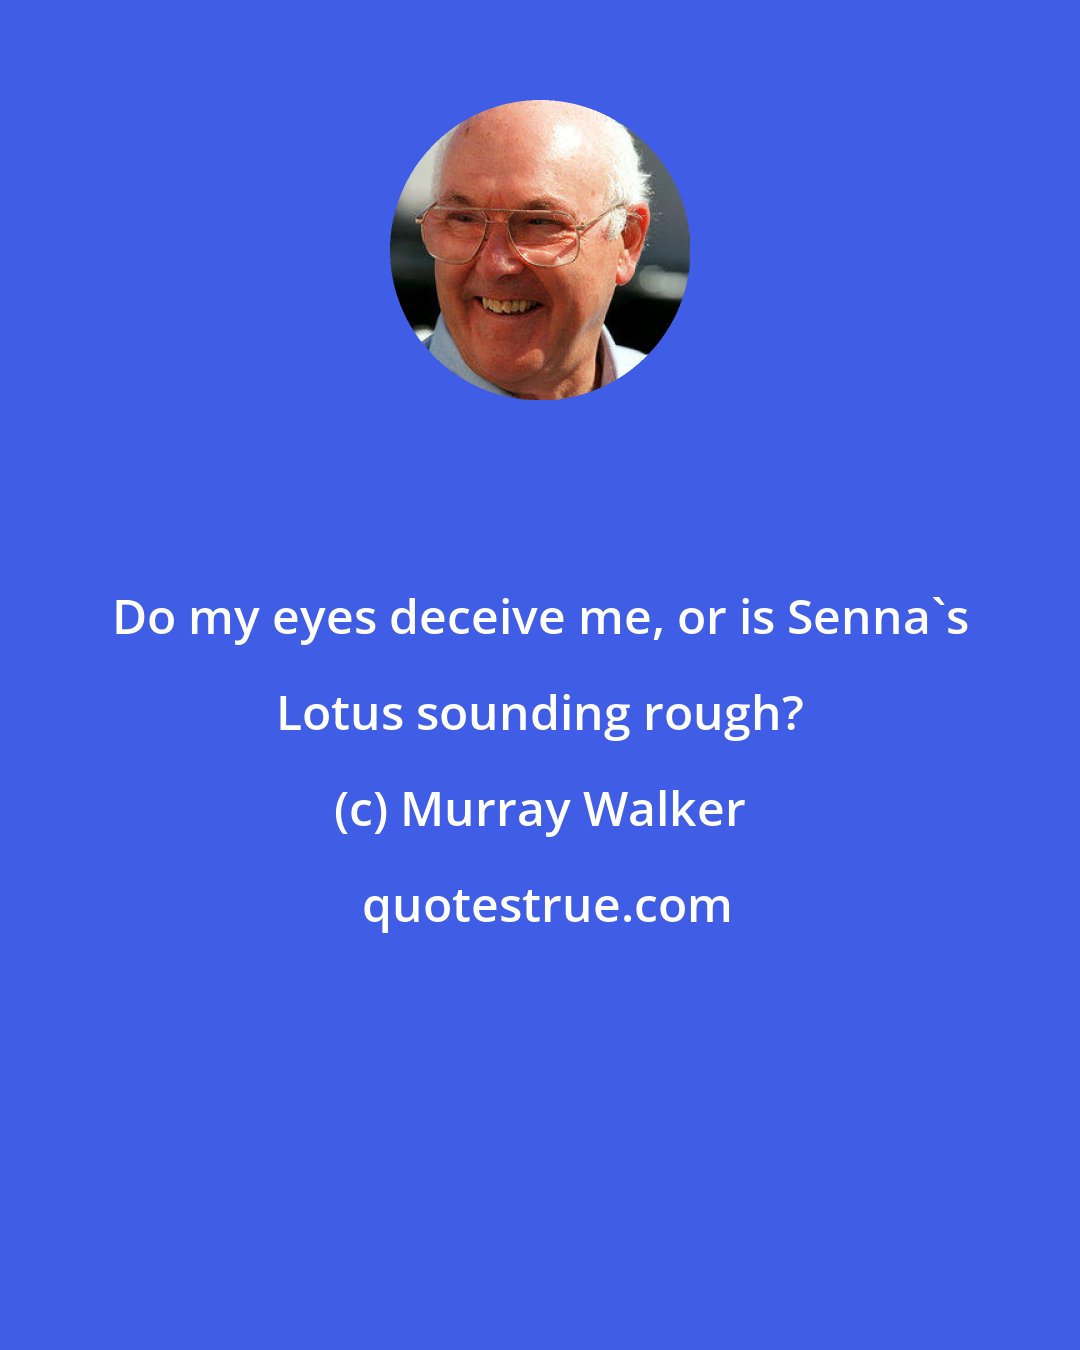 Murray Walker: Do my eyes deceive me, or is Senna's Lotus sounding rough?